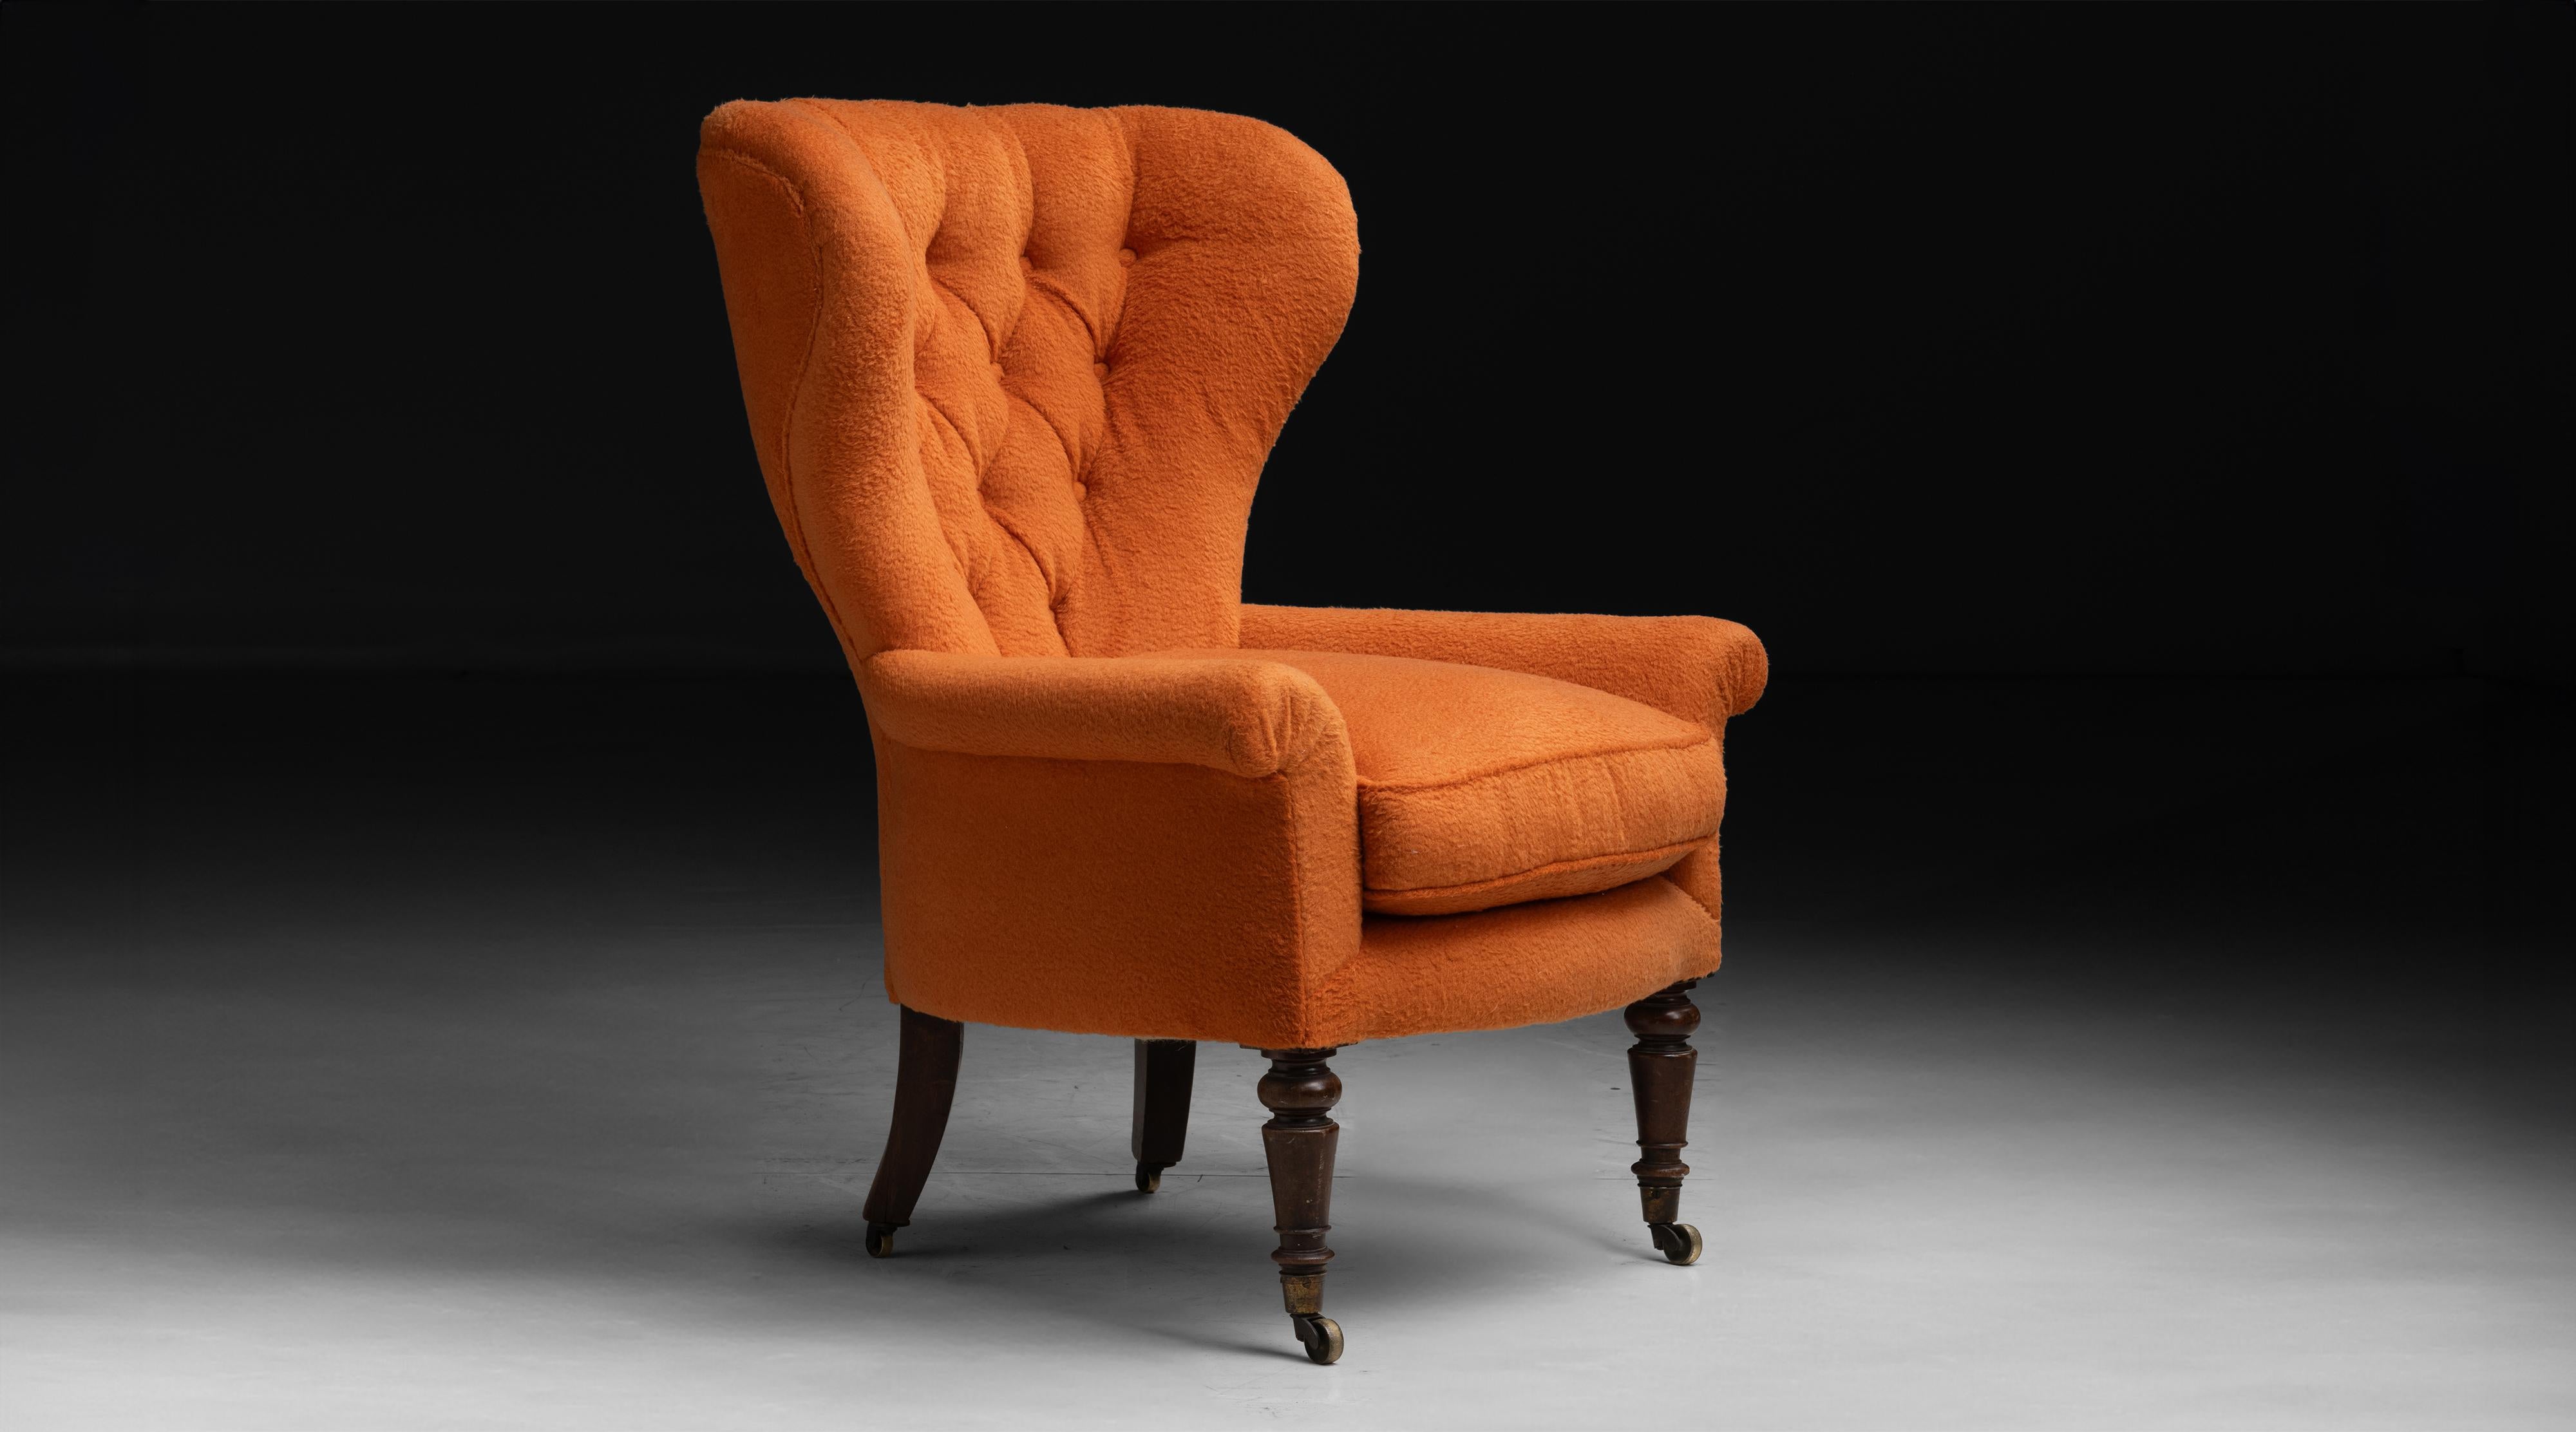 England circa 1820
Antique buttonback armchair frame, newly upholstered in Bichon orange fleece by Rosemary Hallgarten.
31”w x 27”d x 42.5”h x 22”seat